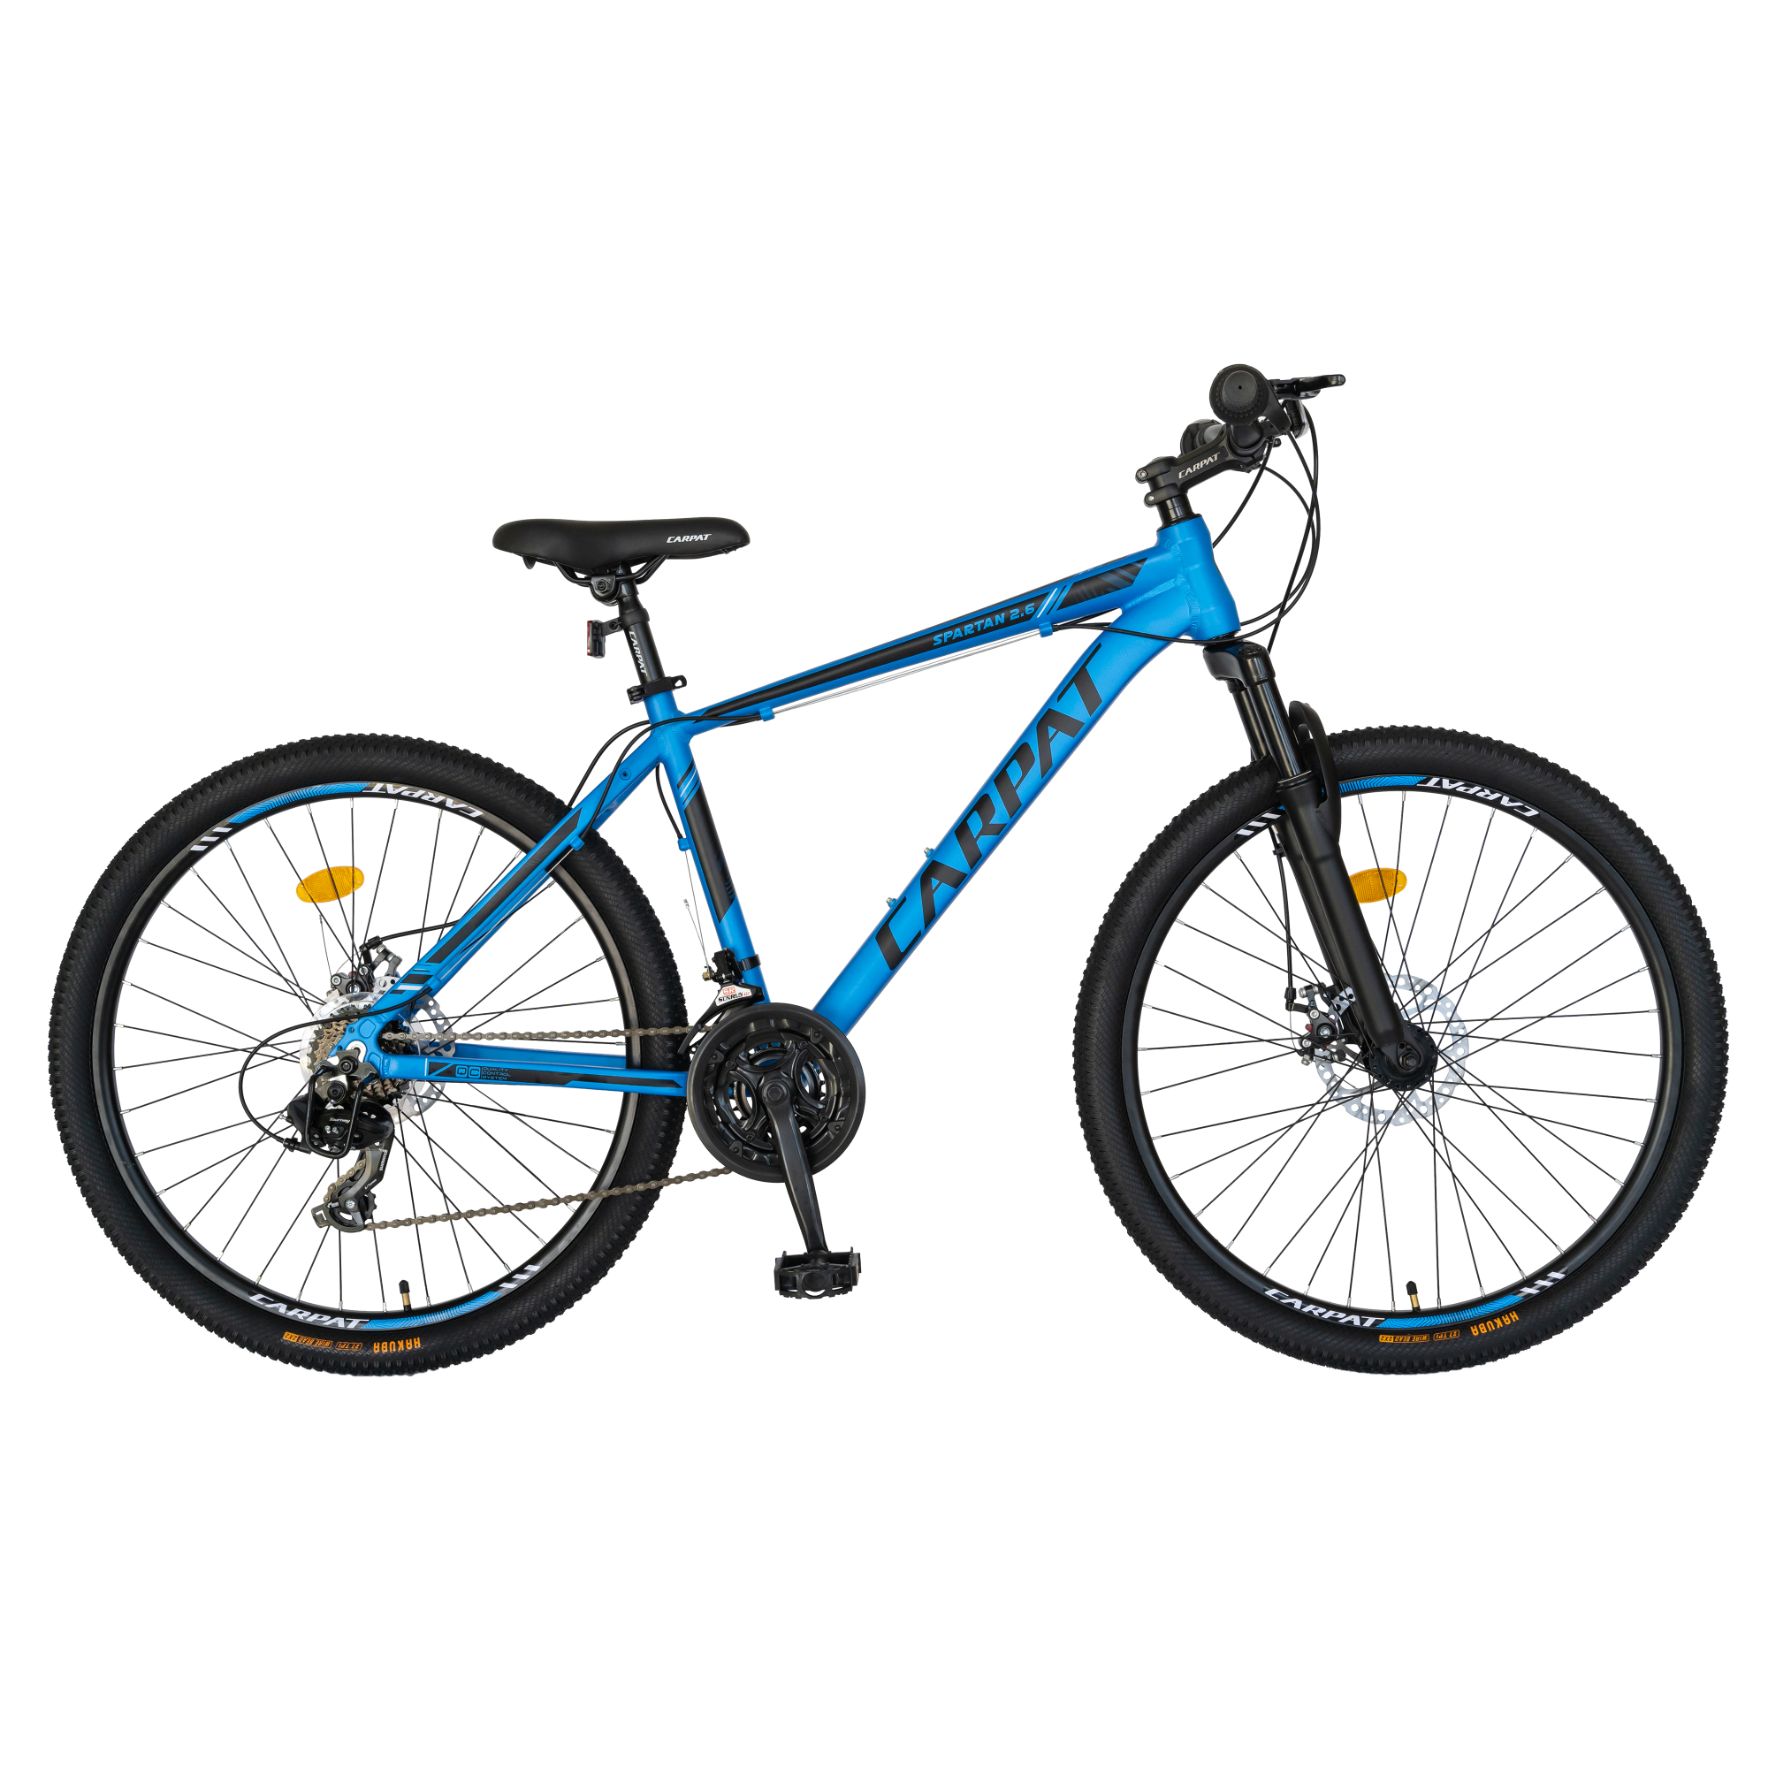 PROMO BICICLETE - Bicicleta MTB-HT Carpat Spartan C2758C 27.5", Albastru/Negru, https:carpatsport.ro